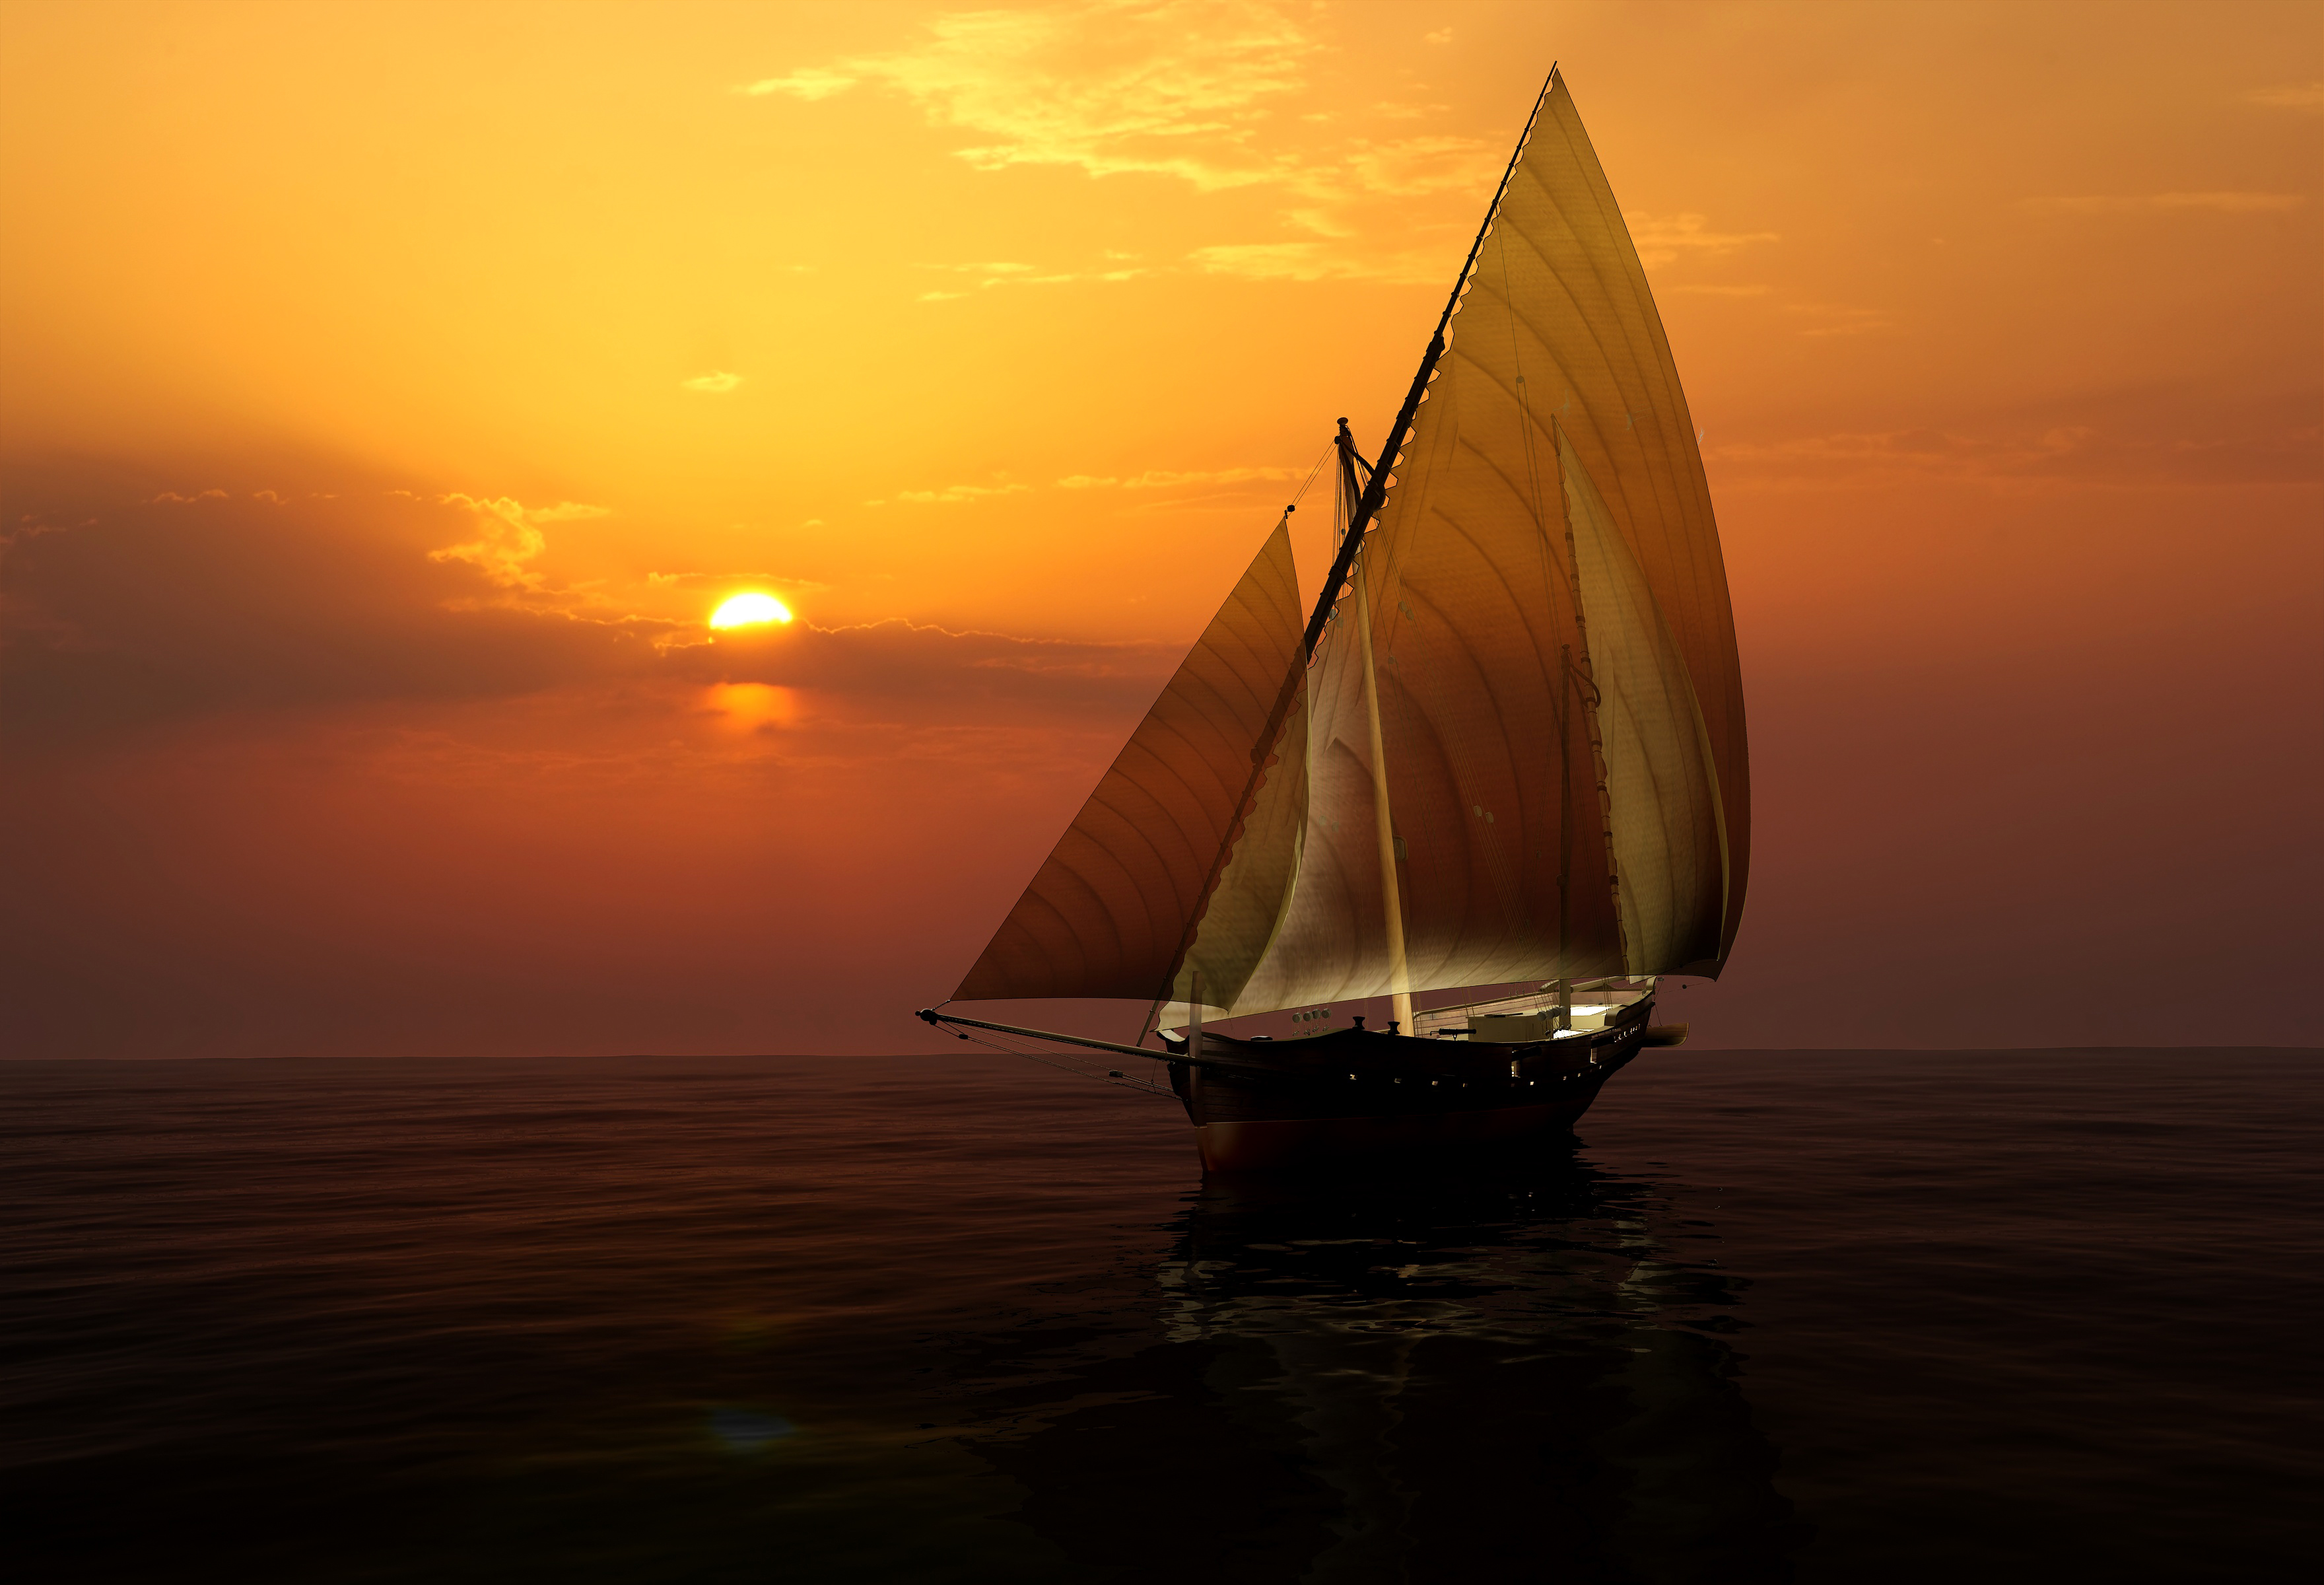 vehicles, sailboat, boat, sailing, sky, sunset